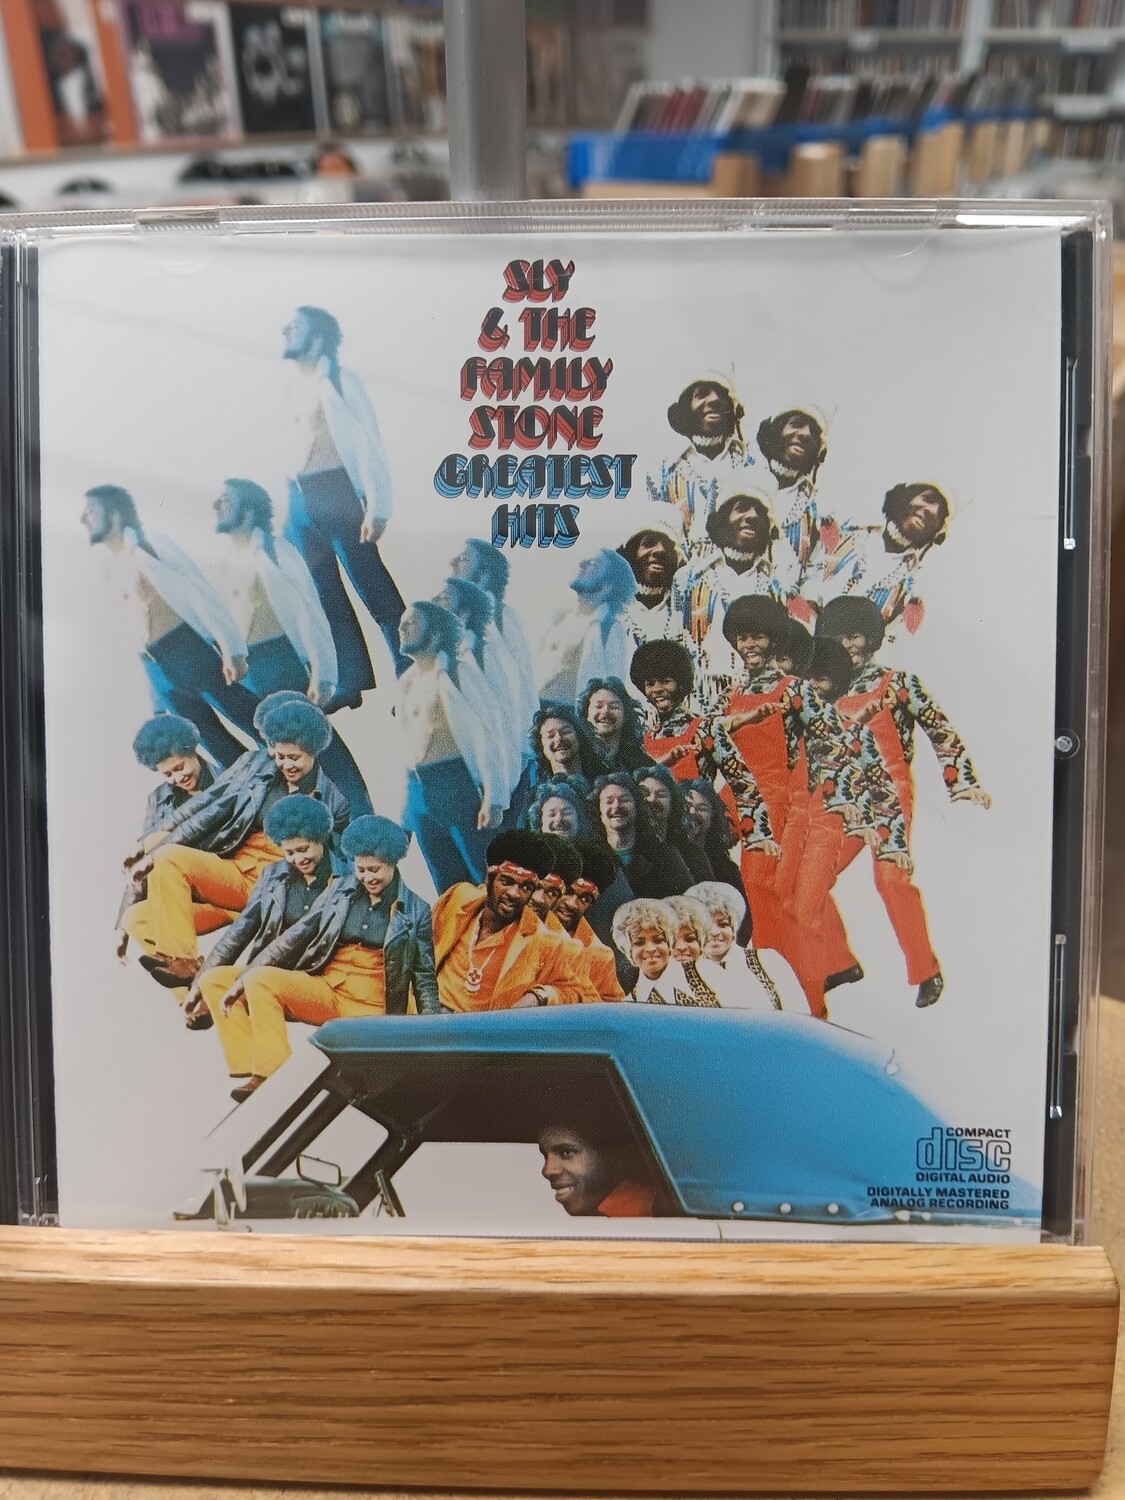 SLY & THE FAMILY STONE - Greatest Hits (CD)